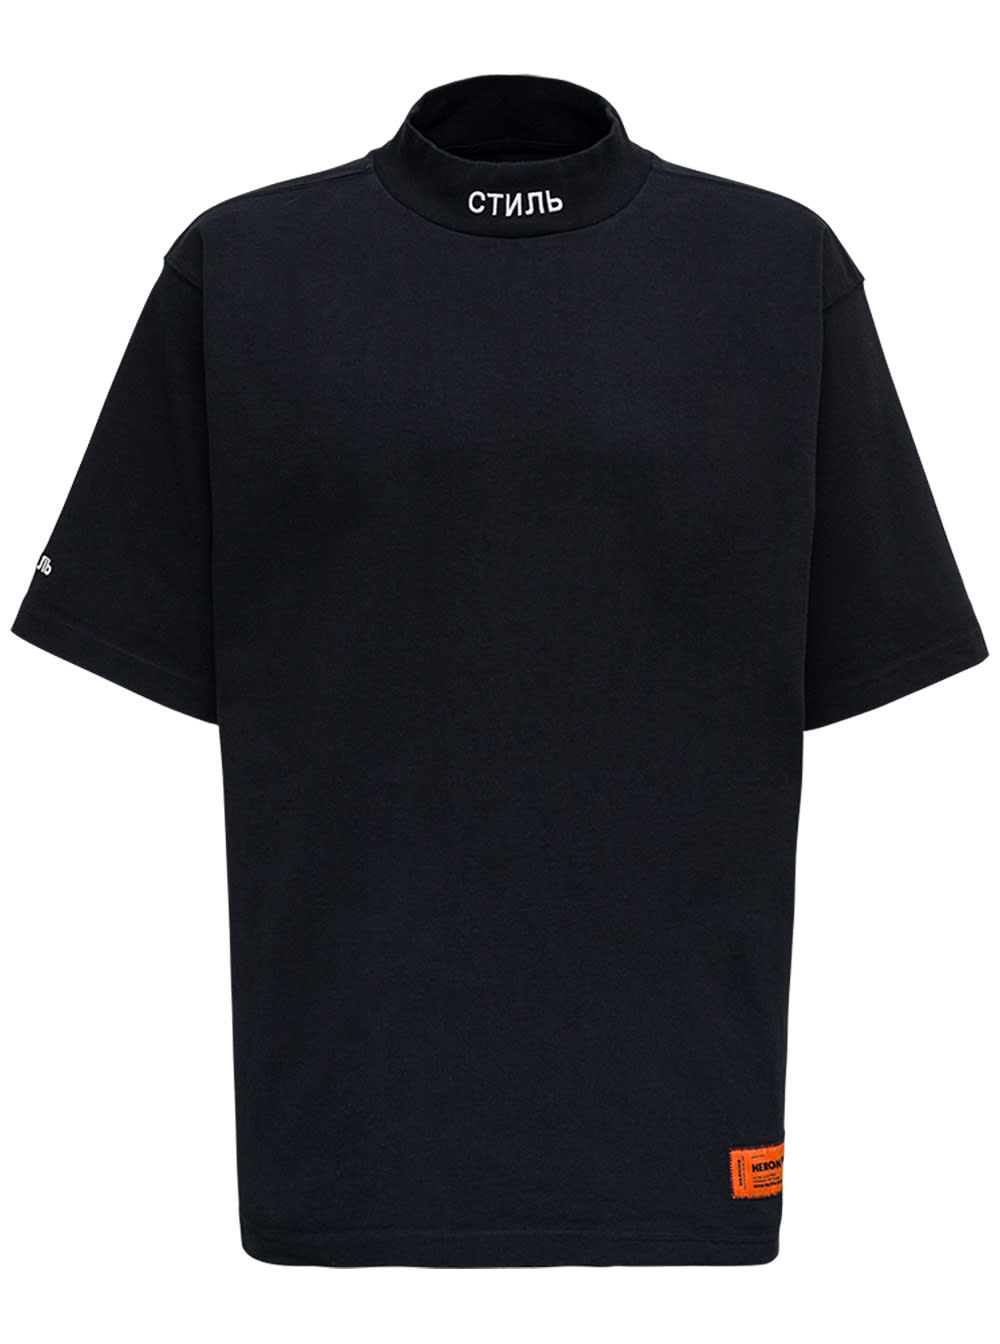 HERON PRESTON Ctnmb Black Jersey T-shirt With Logo